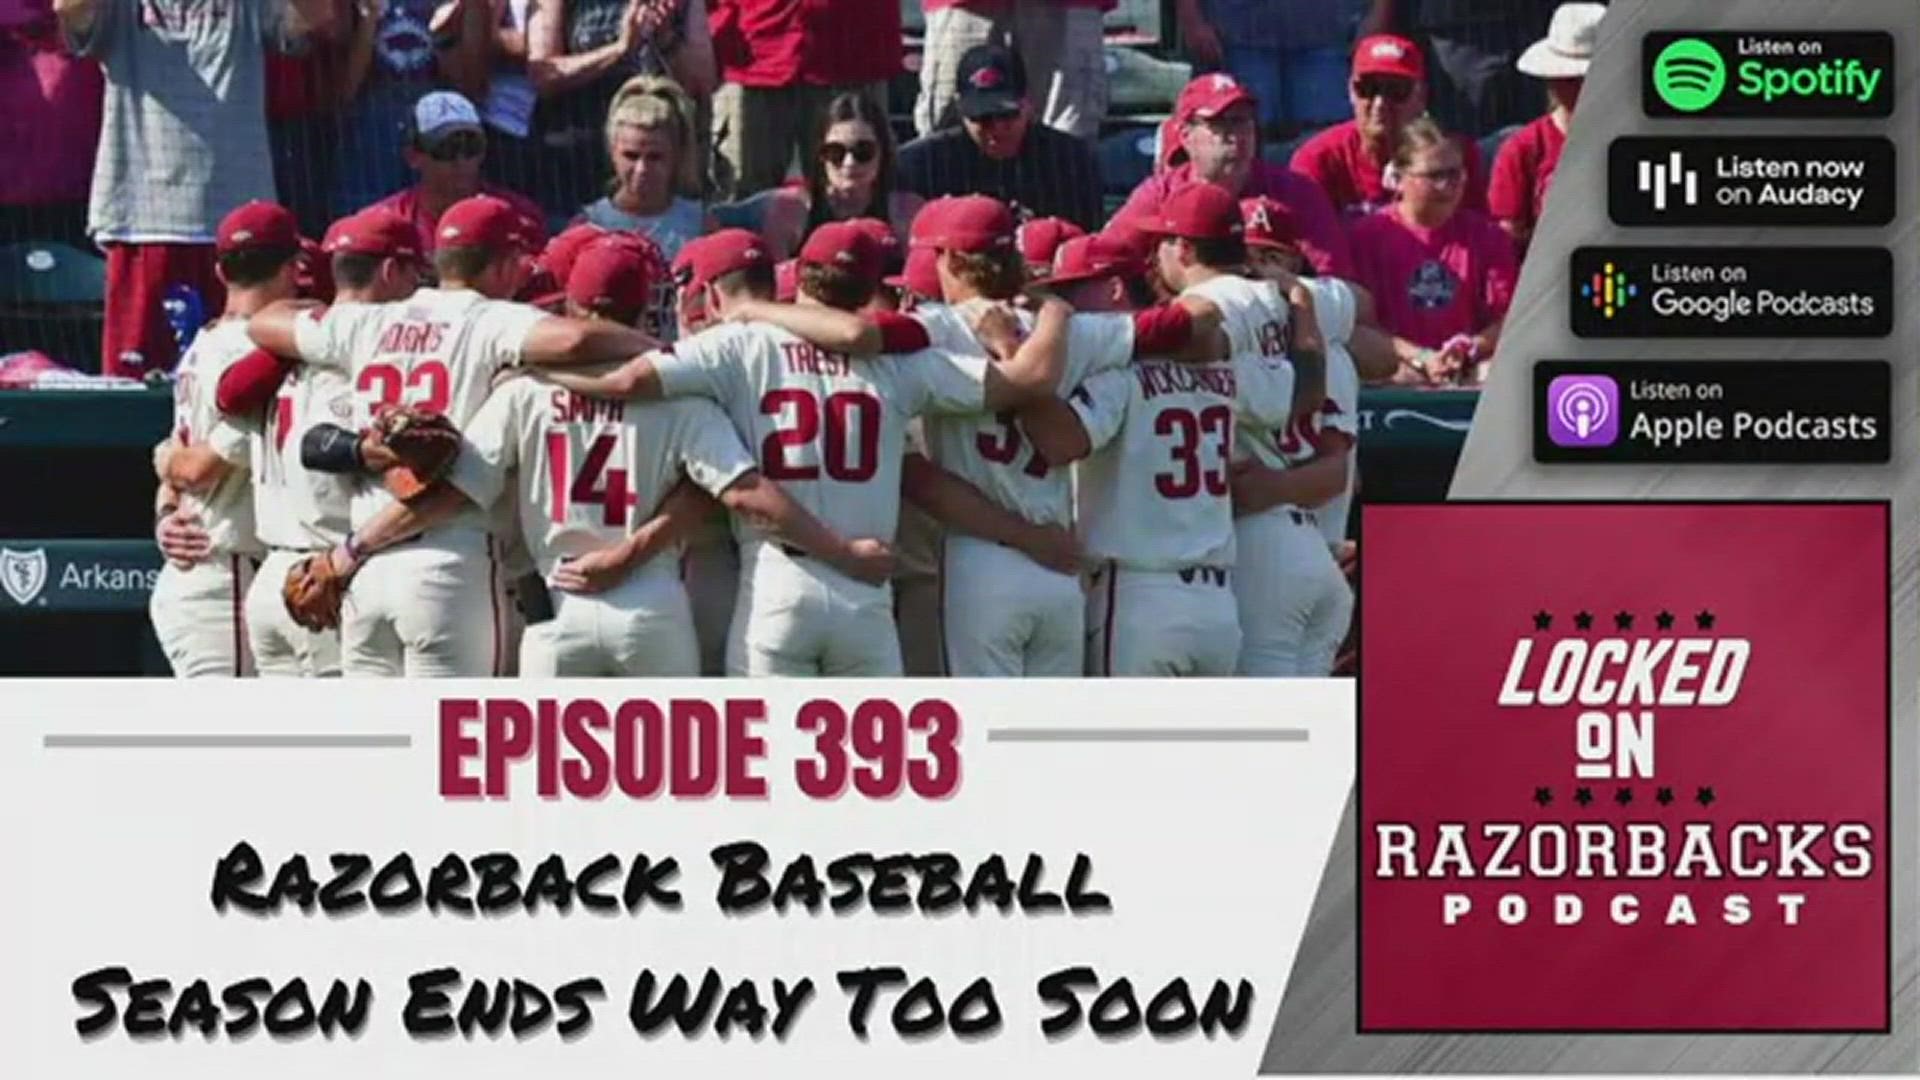 Locked on Razorbacks Episode 393: Razorback Baseball season ends way too soon